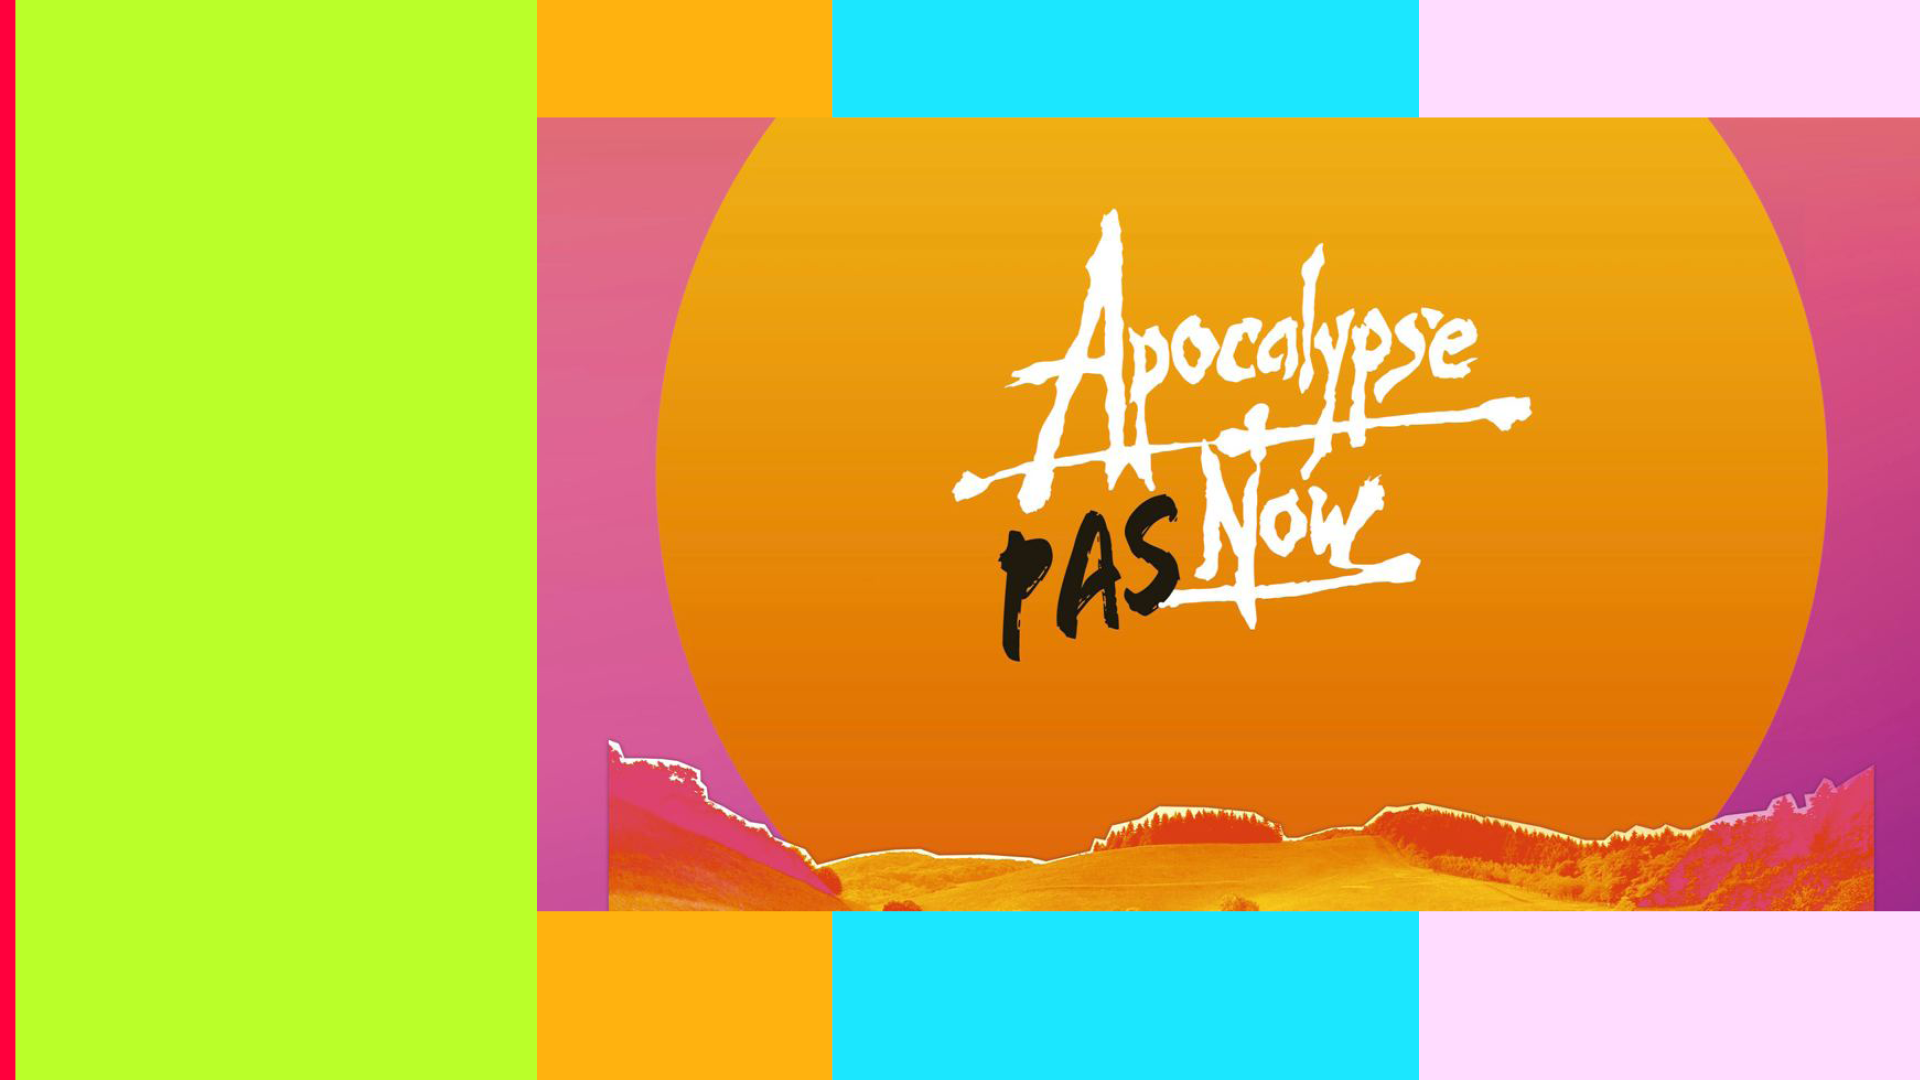 Apocalypse (pas) now